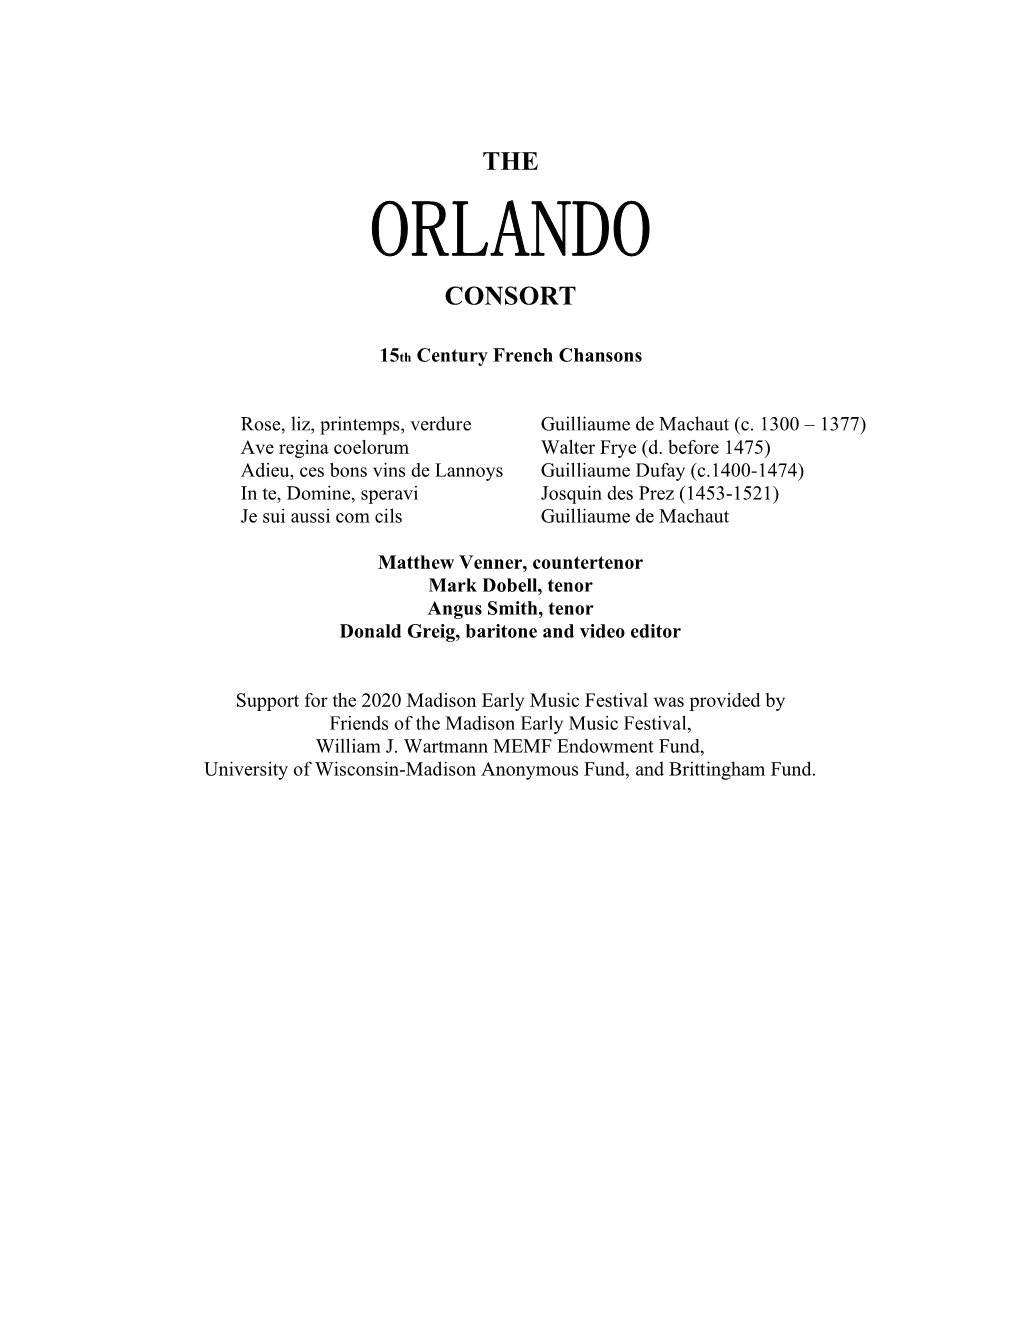 Orlando Consort